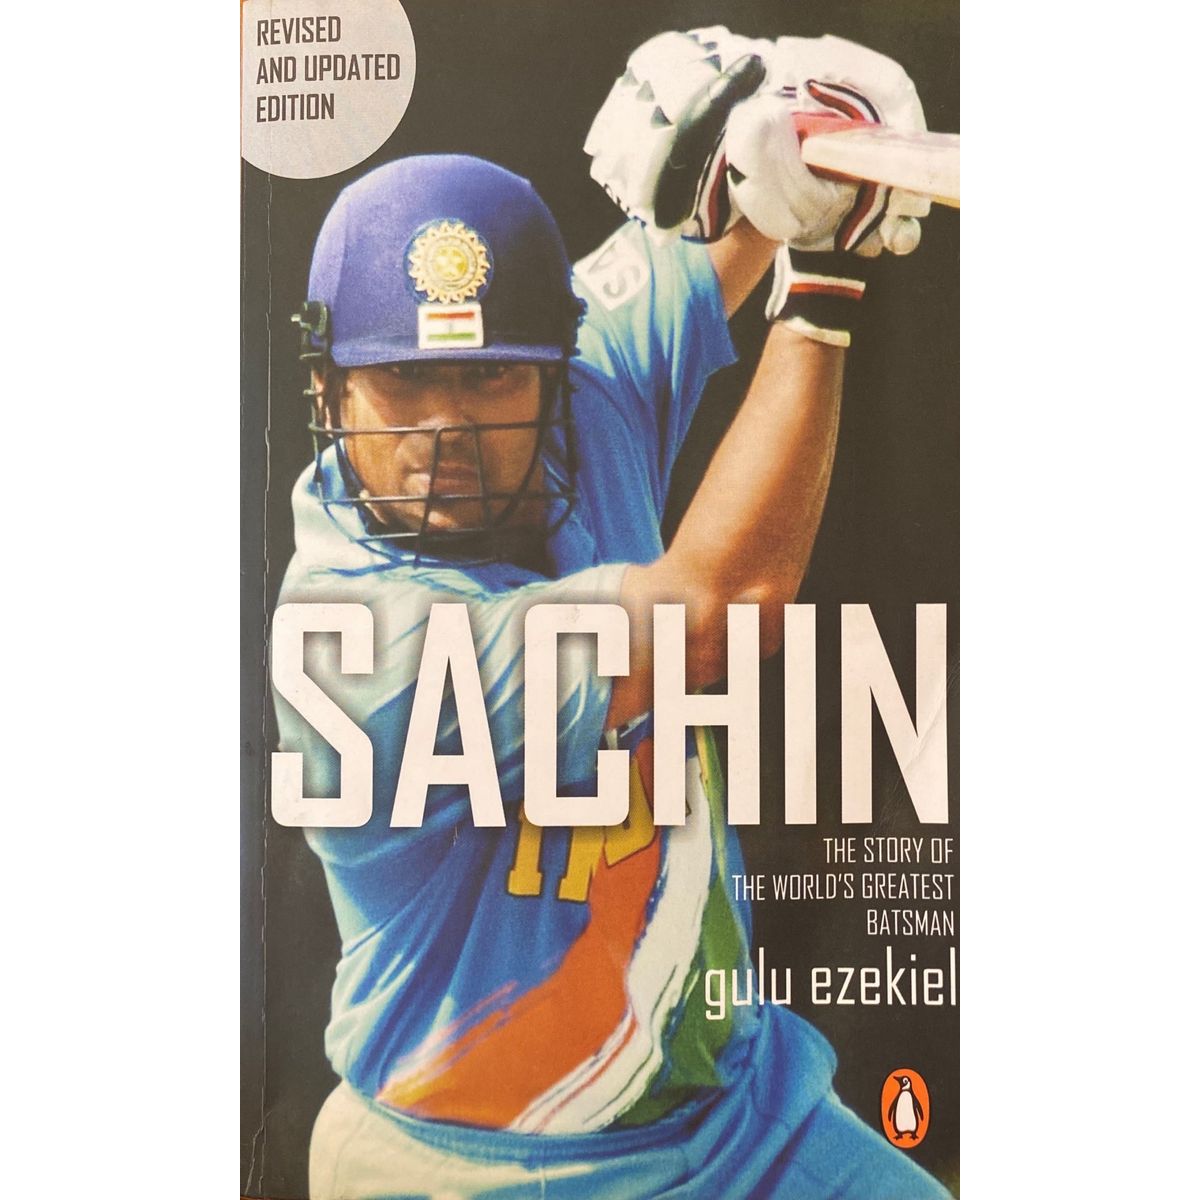 ISBN: 9780143066903 / 0143066900 - Sachin: The Story of the World's Greatest Batsman by Gulu Ezekiel [2010]